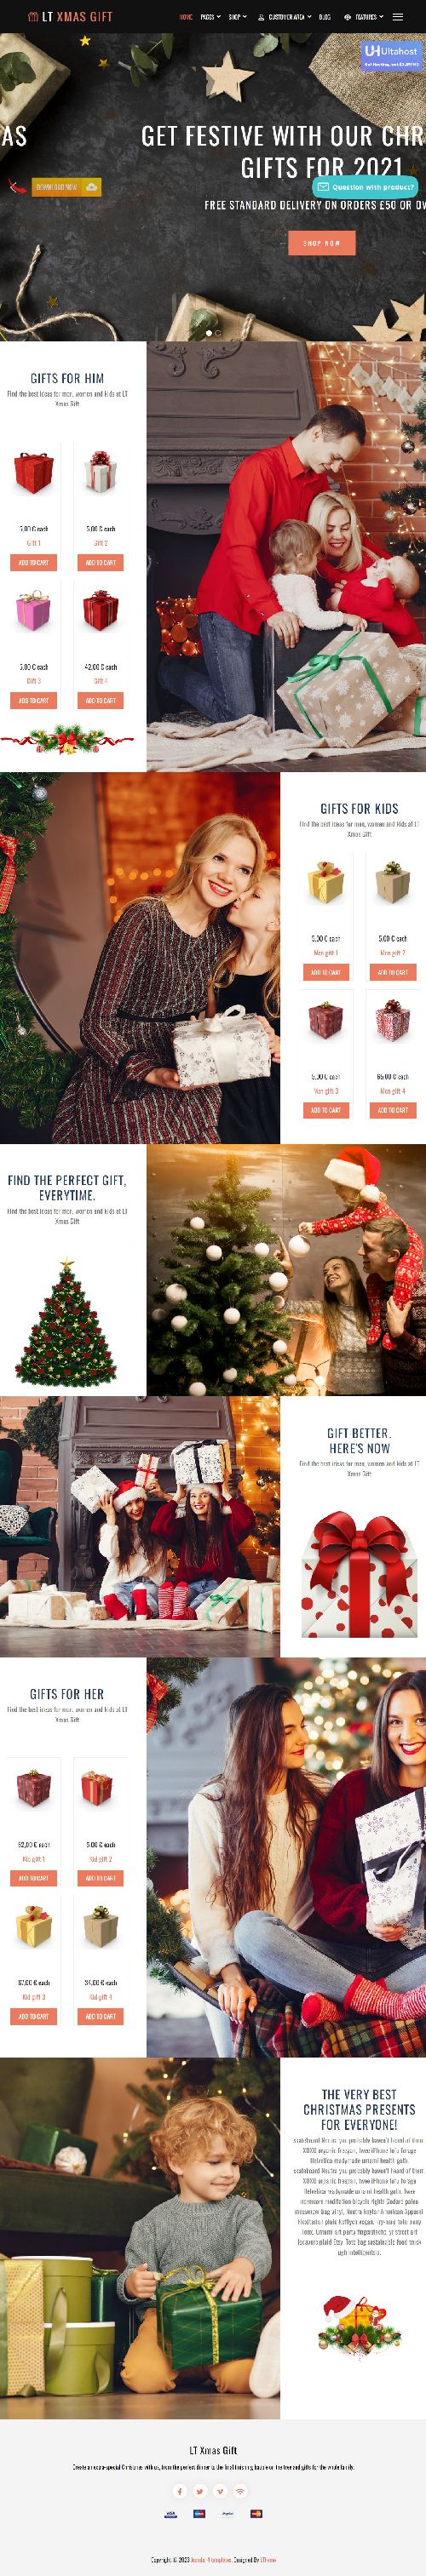 LT xMas Gift - eCommerce Online Hikashop Joomla 4 Template